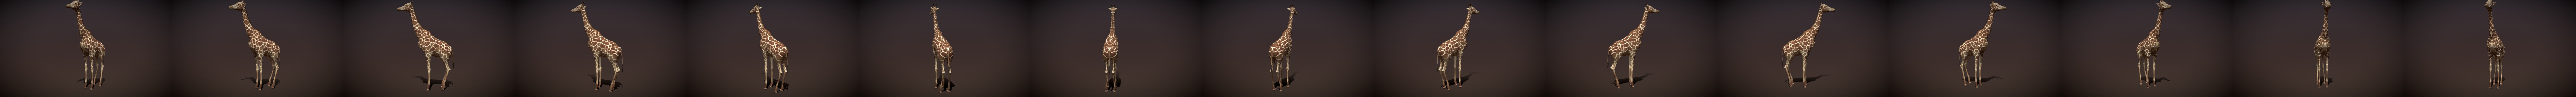 Safari Animals Giraffe Buy Royalty Free 3d Model By 3drt Com 3drt Com 29de78c